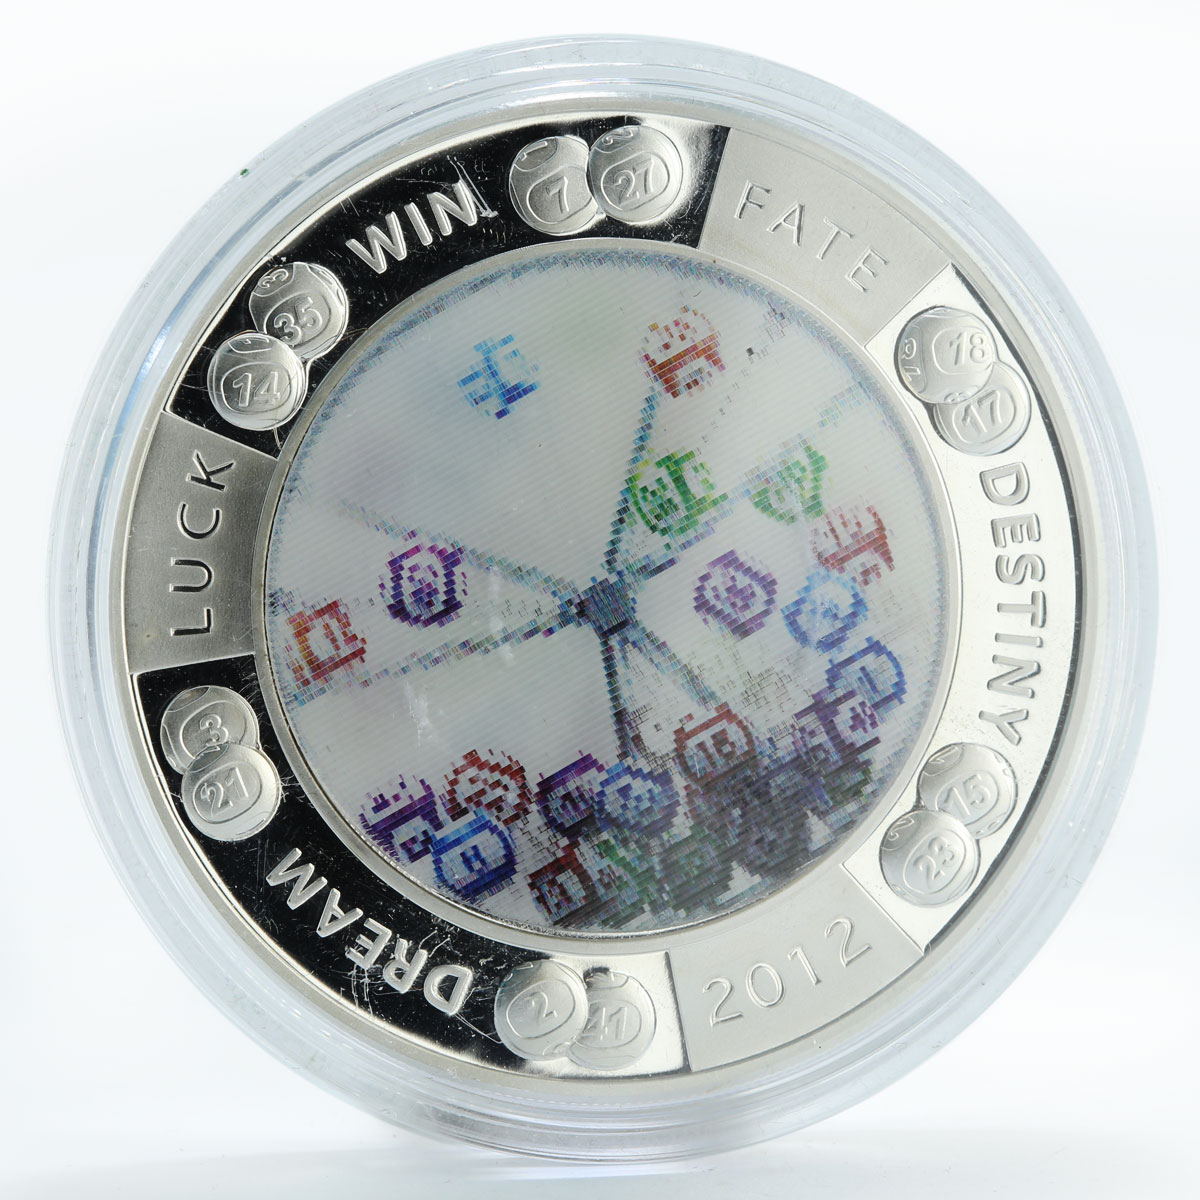 Niue 2 dollars Fortune Dream Luck Fate Destiny silver coin 2012